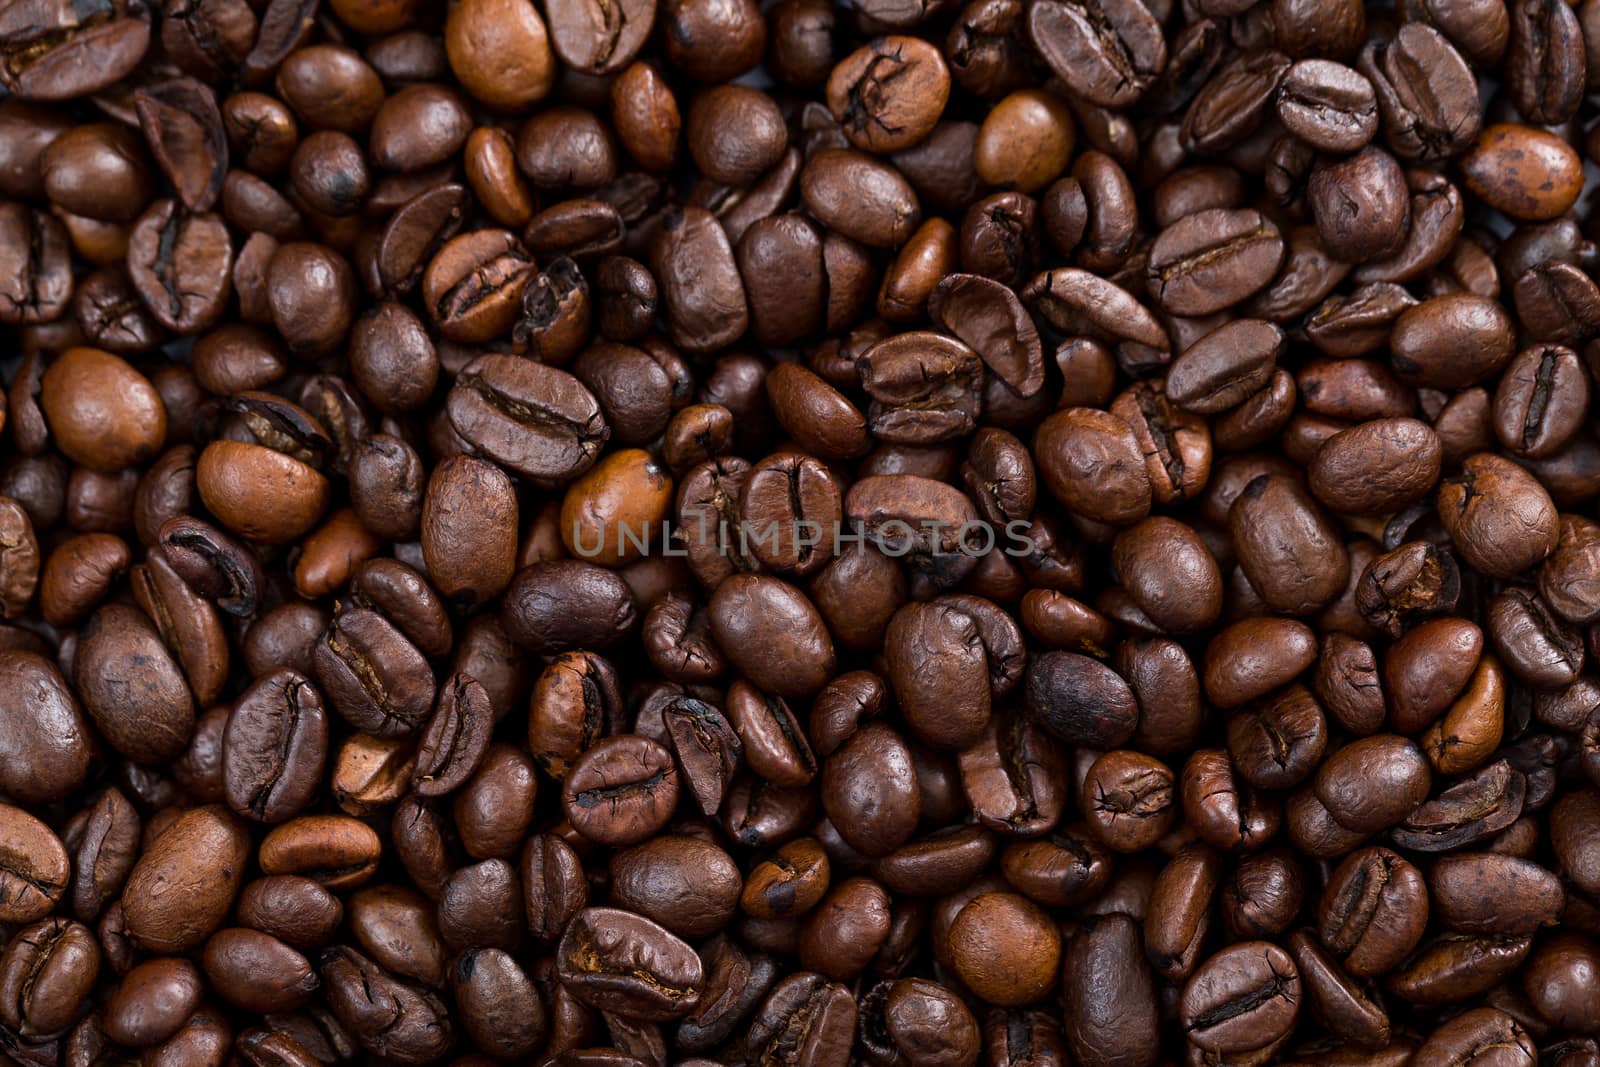 Roasted Coffee bean texture